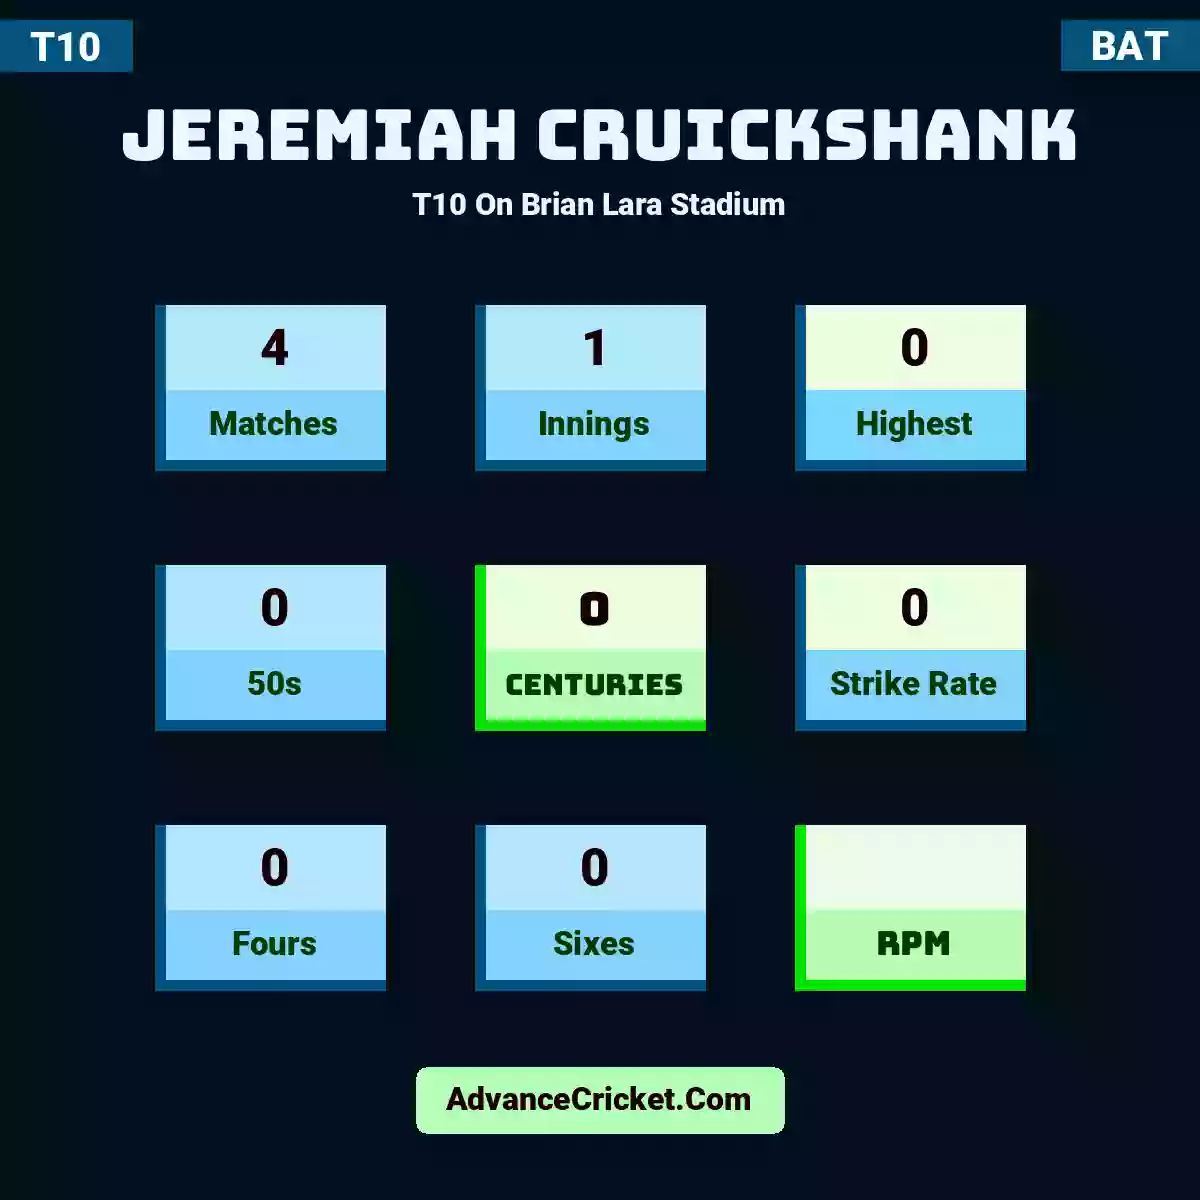 Jeremiah Cruickshank T10  On Brian Lara Stadium, Jeremiah Cruickshank played 4 matches, scored 0 runs as highest, 0 half-centuries, and 0 centuries, with a strike rate of 0. j.cruickshank hit 0 fours and 0 sixes.